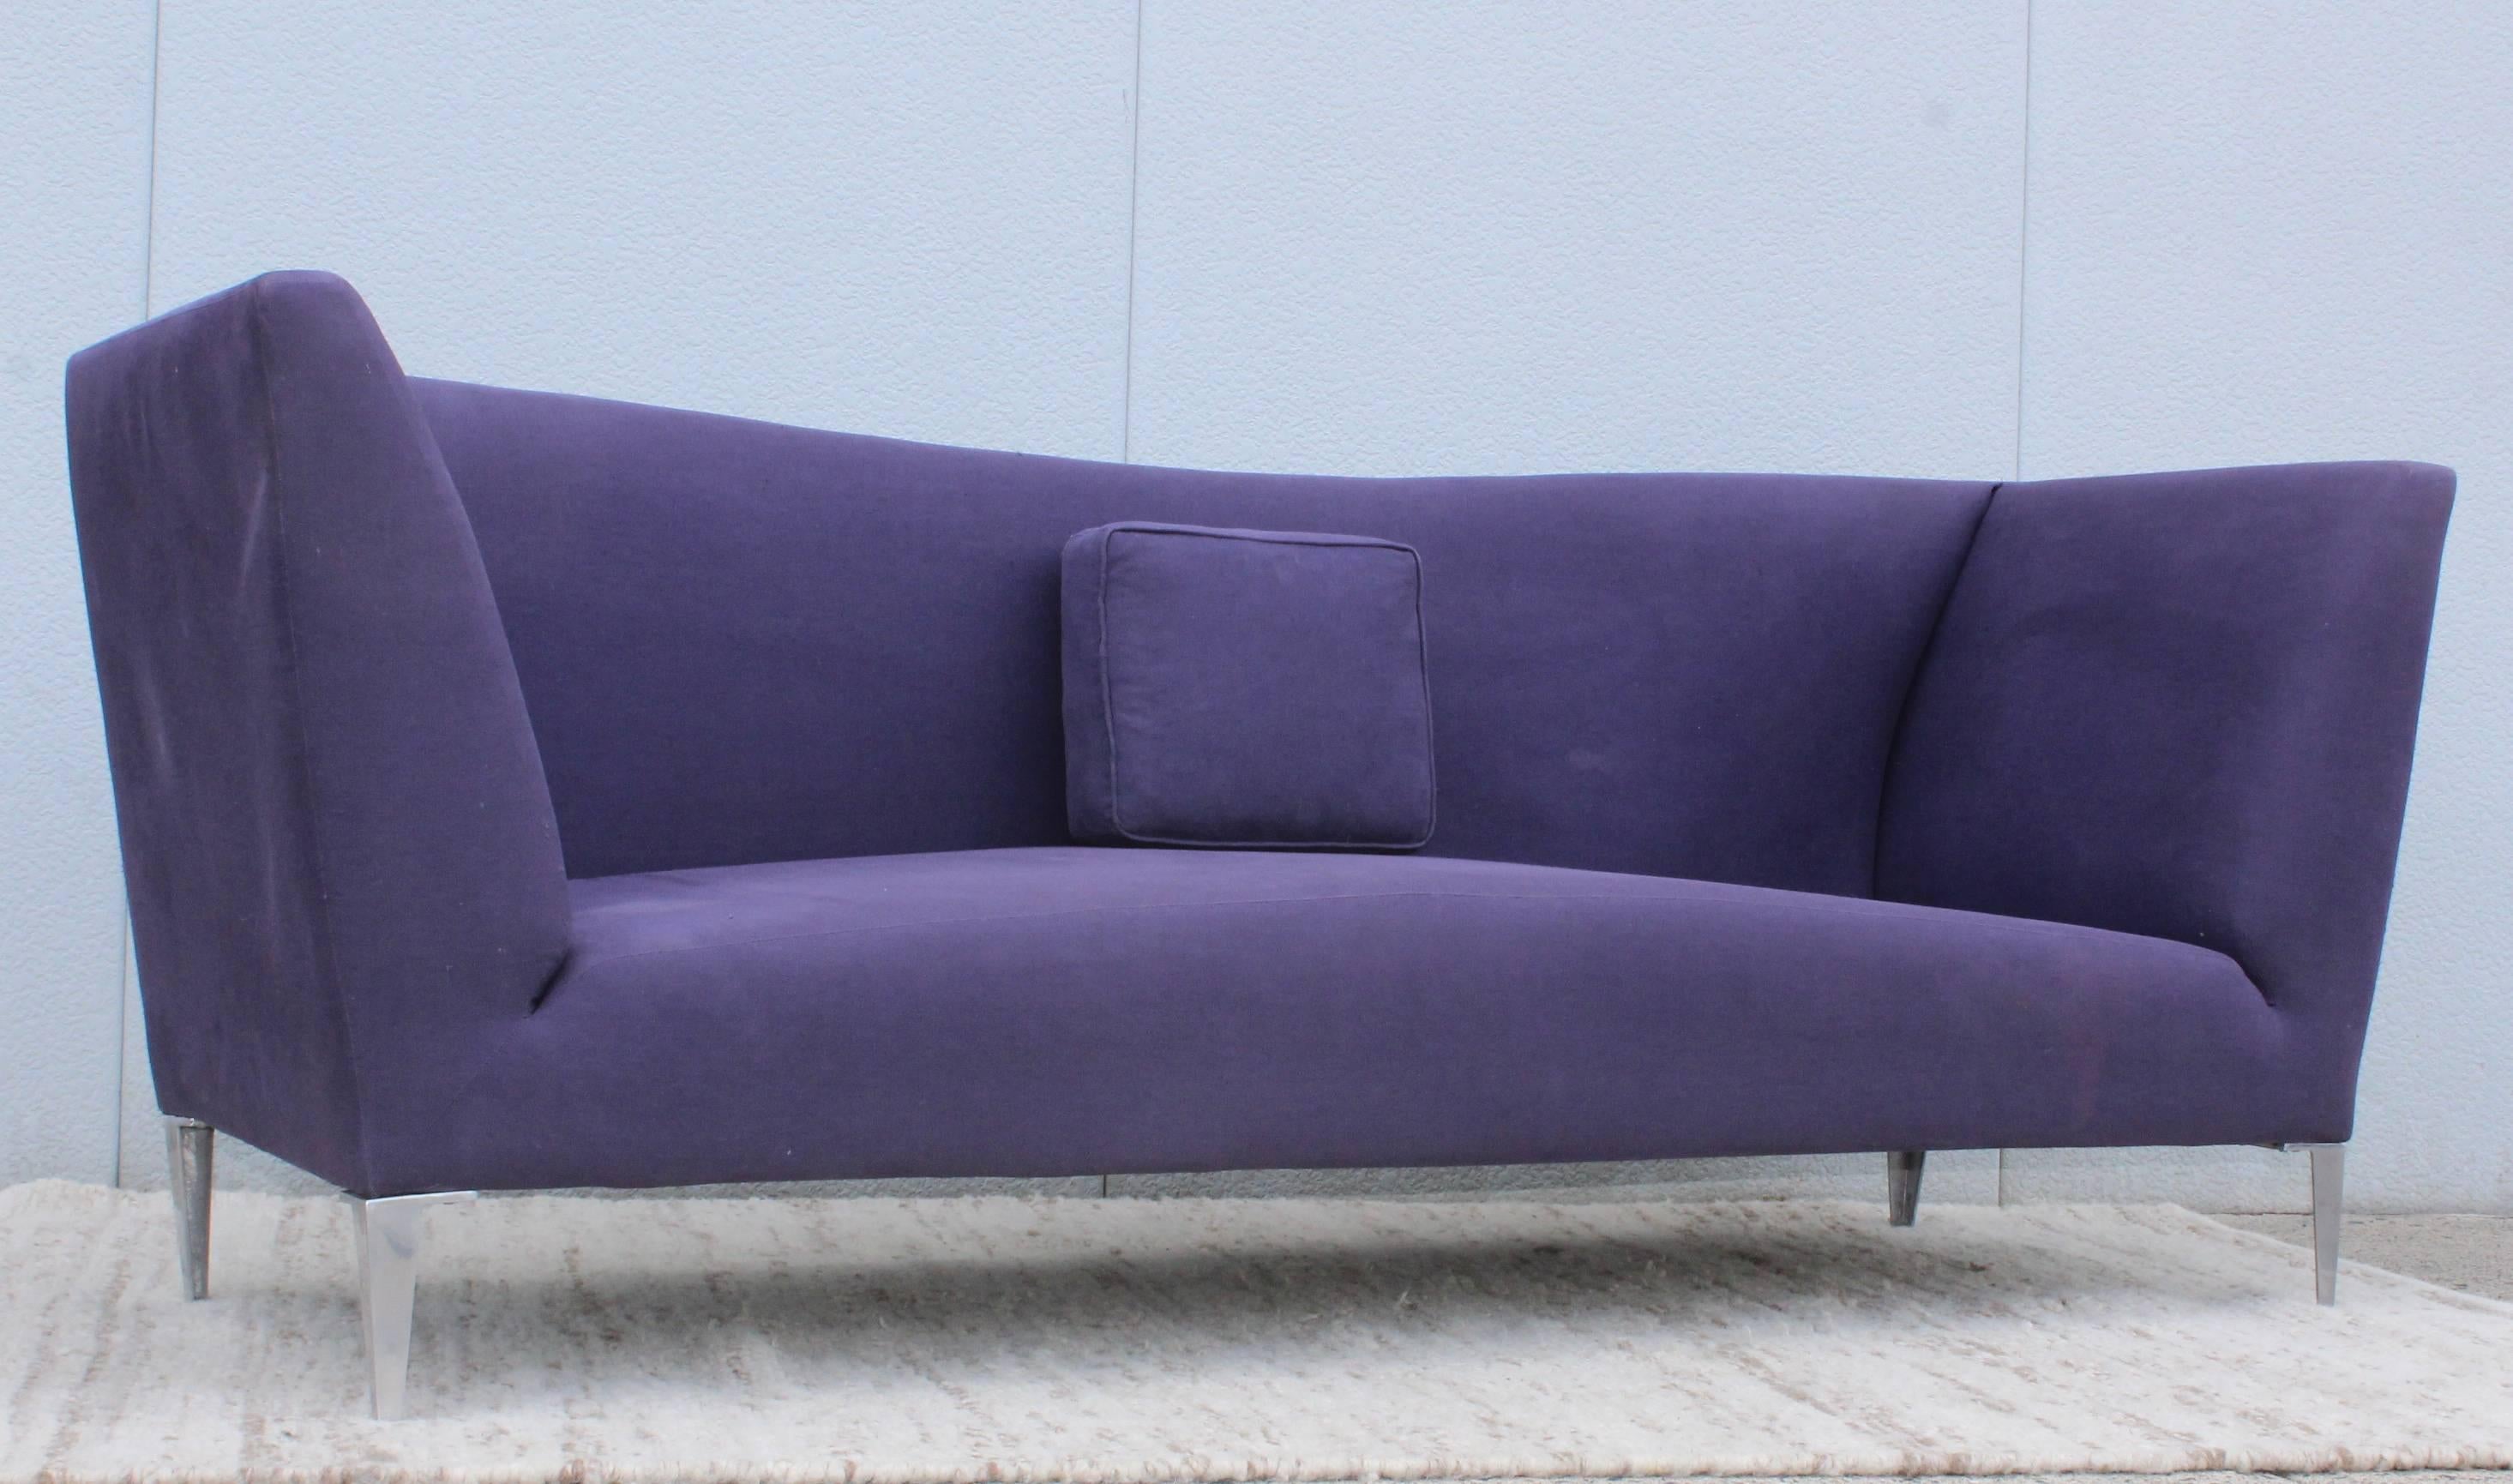 1990s Jasper Morrison designed for Capellini prototype sofa, in vintage original condition.